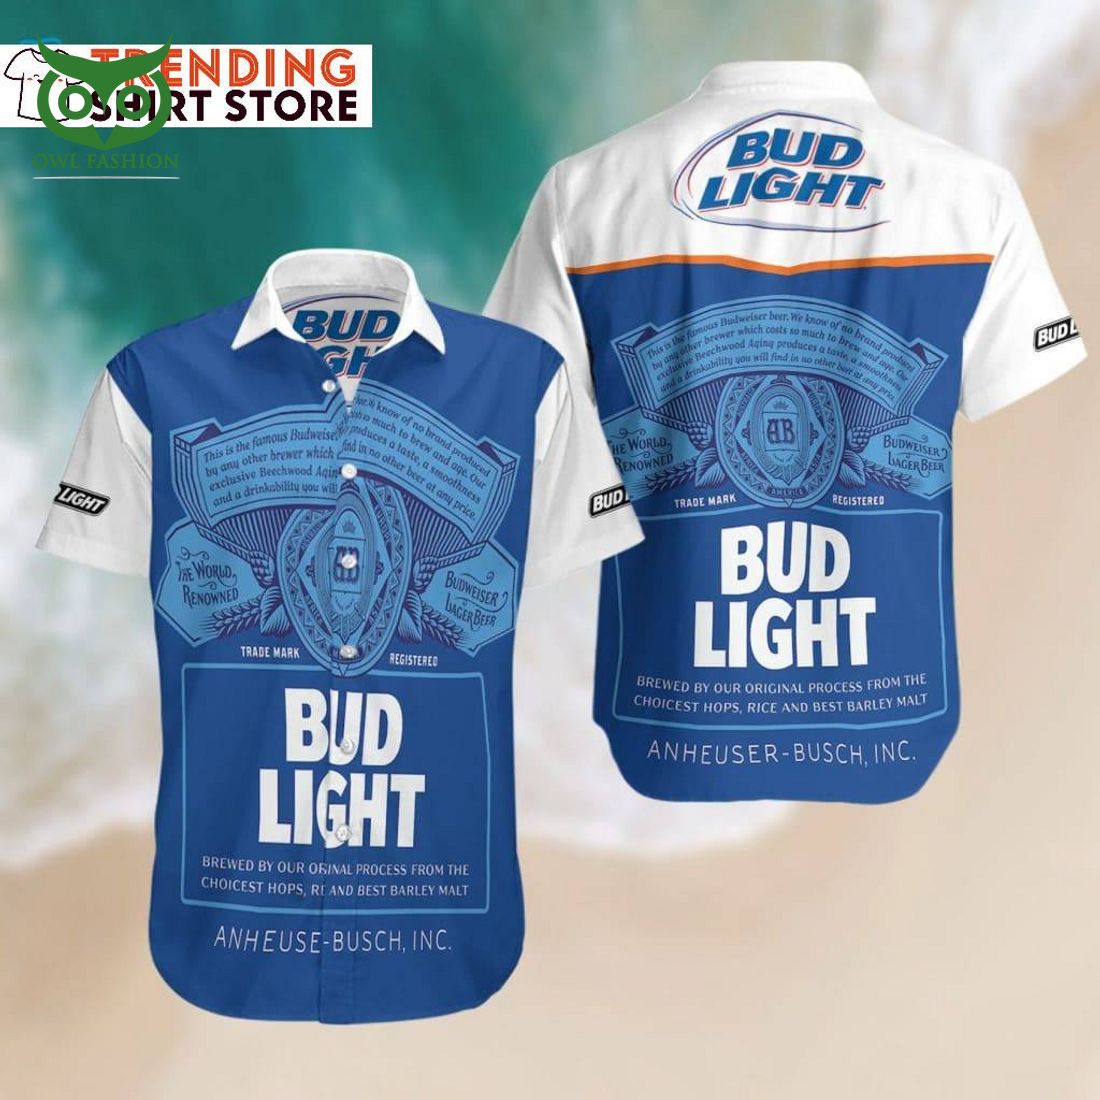 bud light hawaiian shirt anheuser busch inc summer gift for beer drinkers 1 3IS1N.jpg